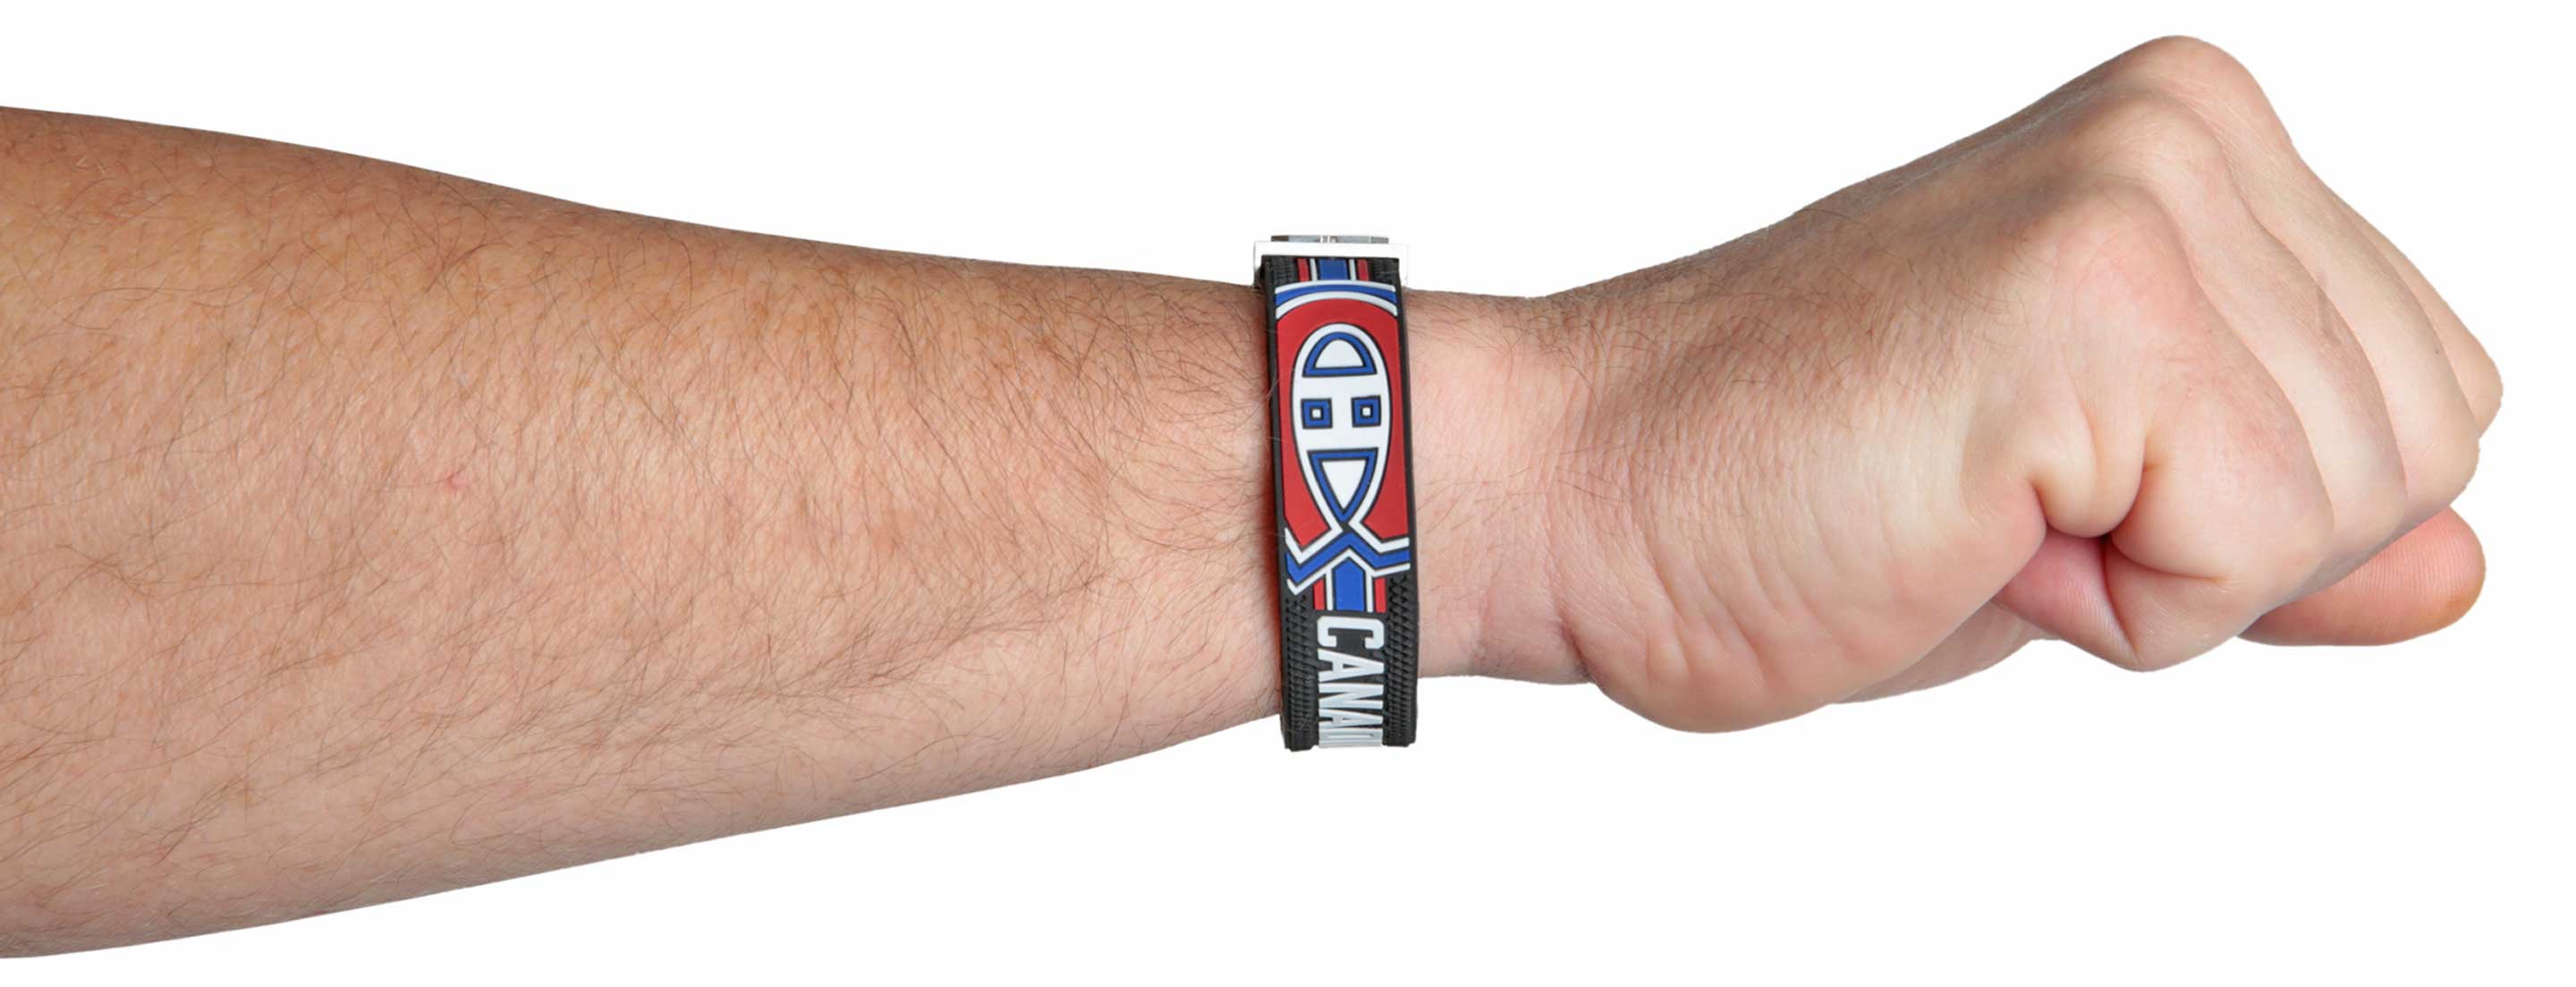  Montreal Canadiens bracelet fist